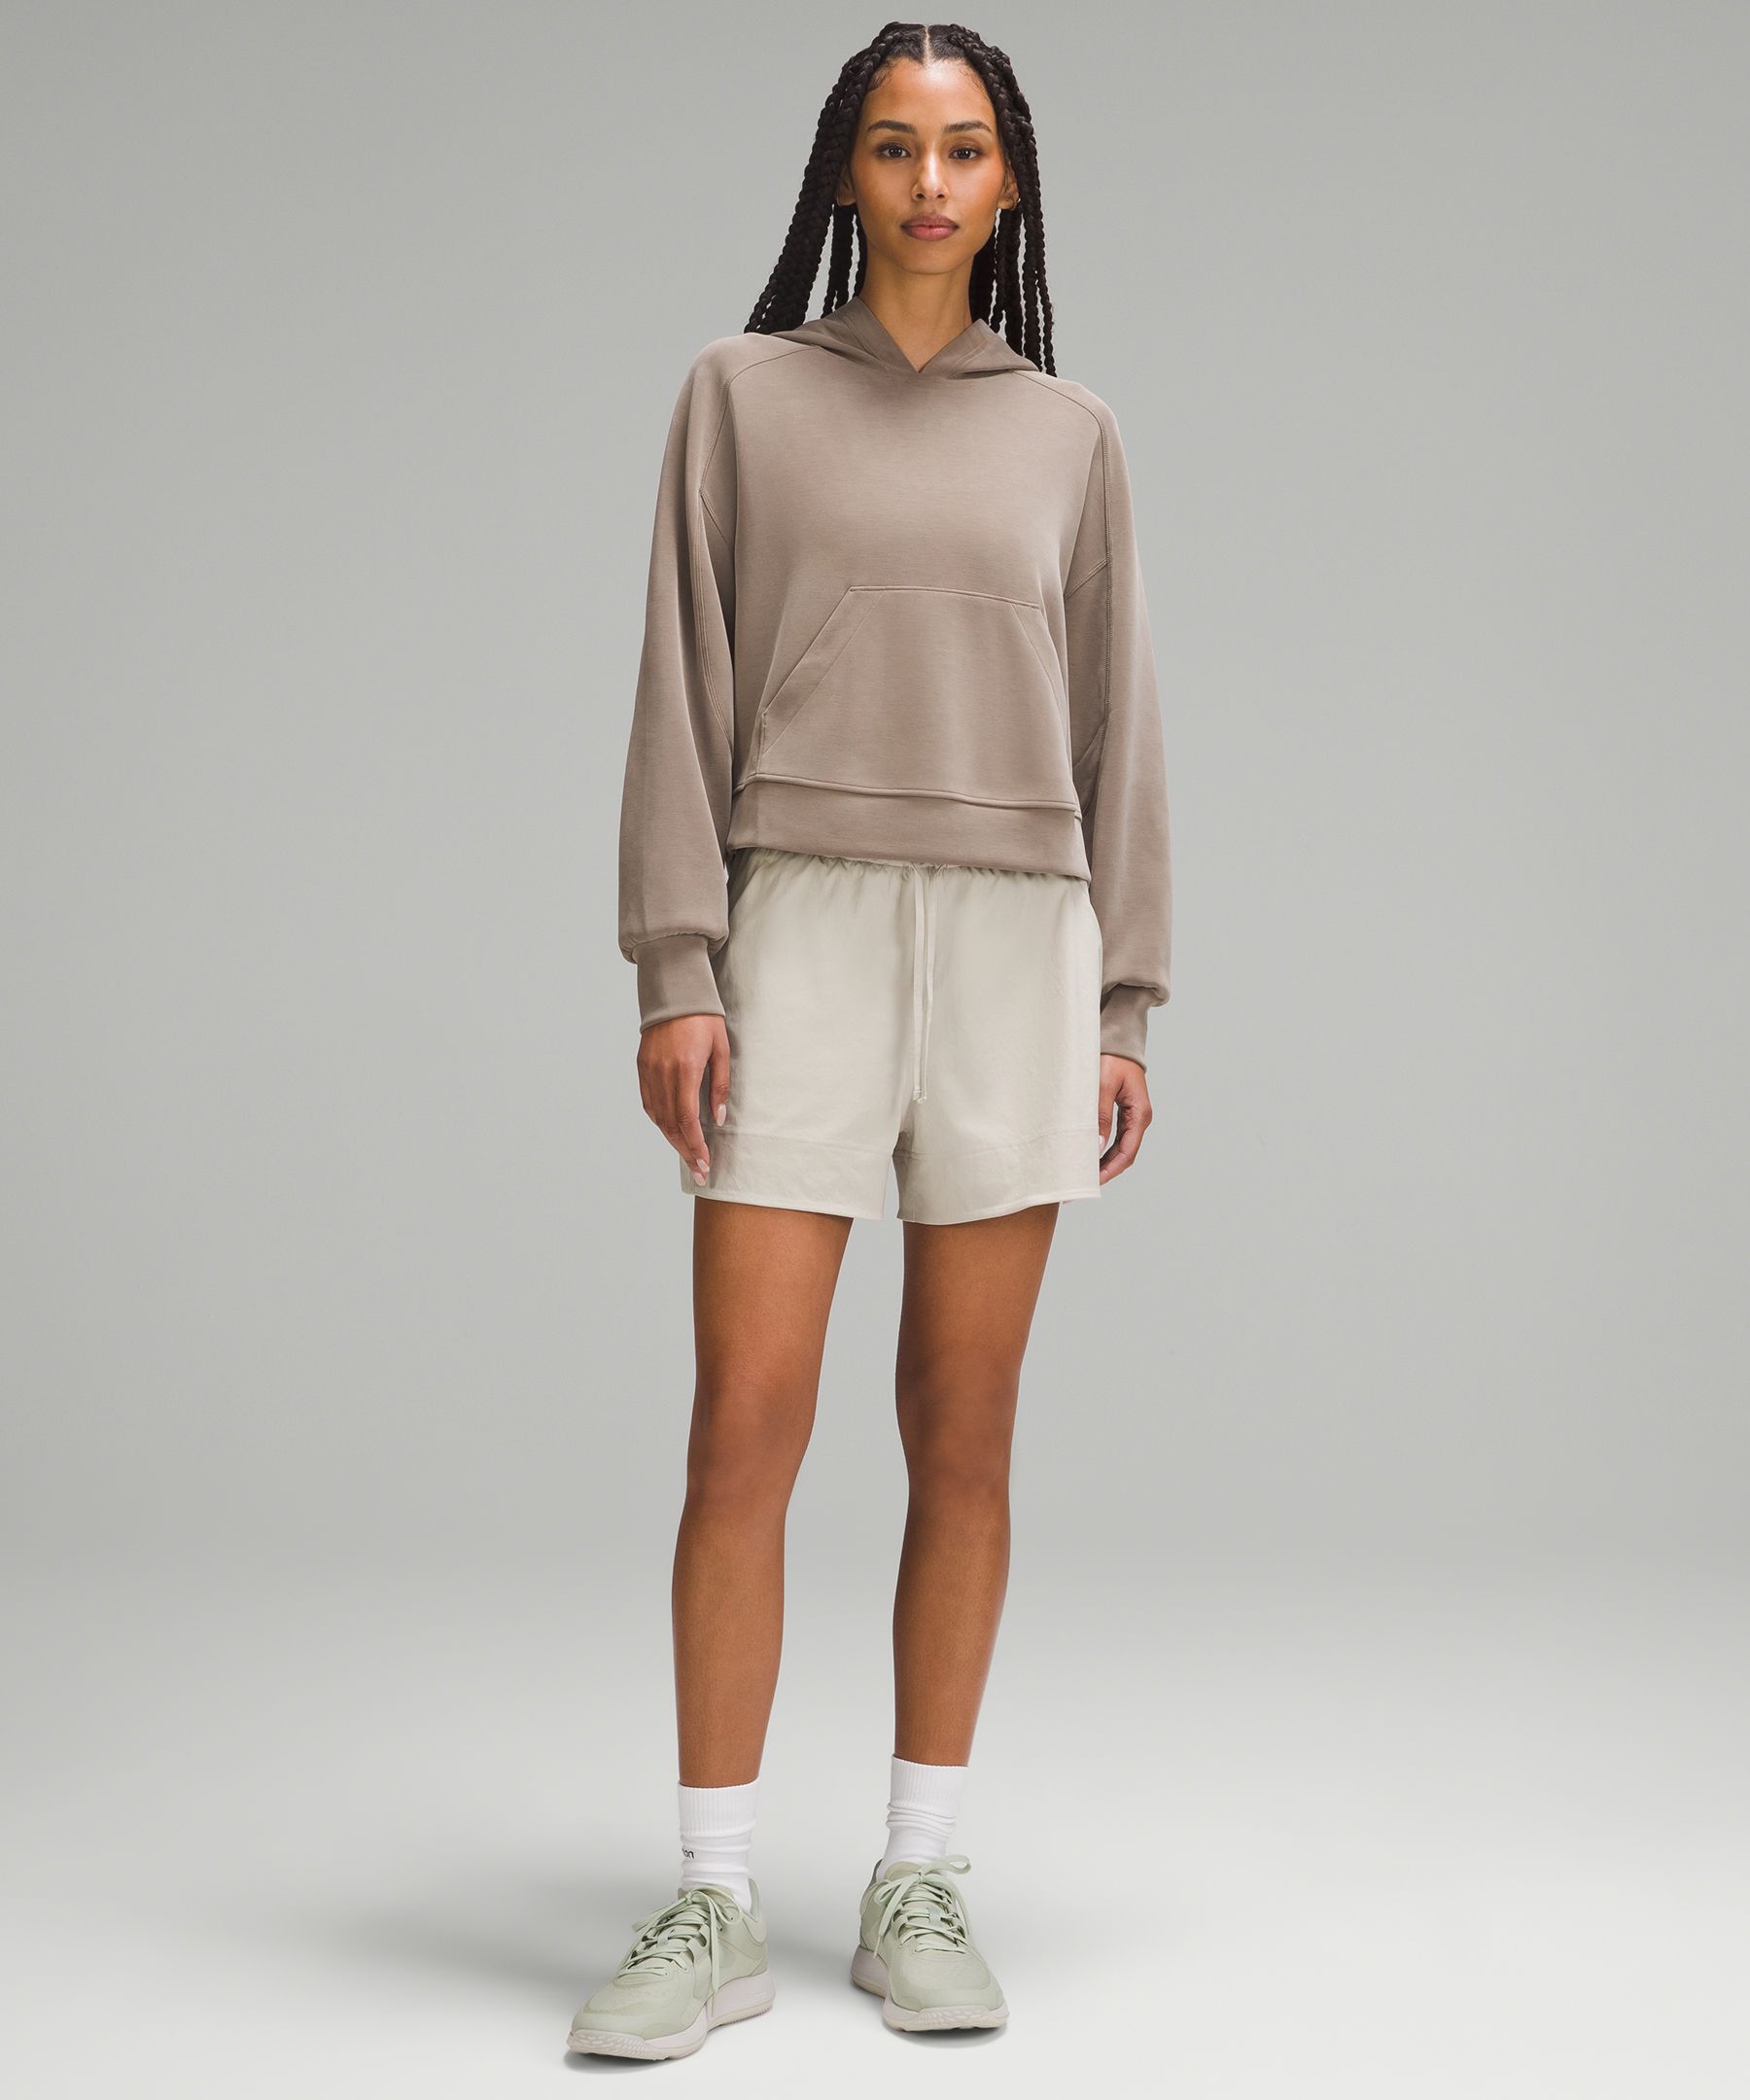 grey lululemon shorts size 8 4 inch inseam Perfect - Depop